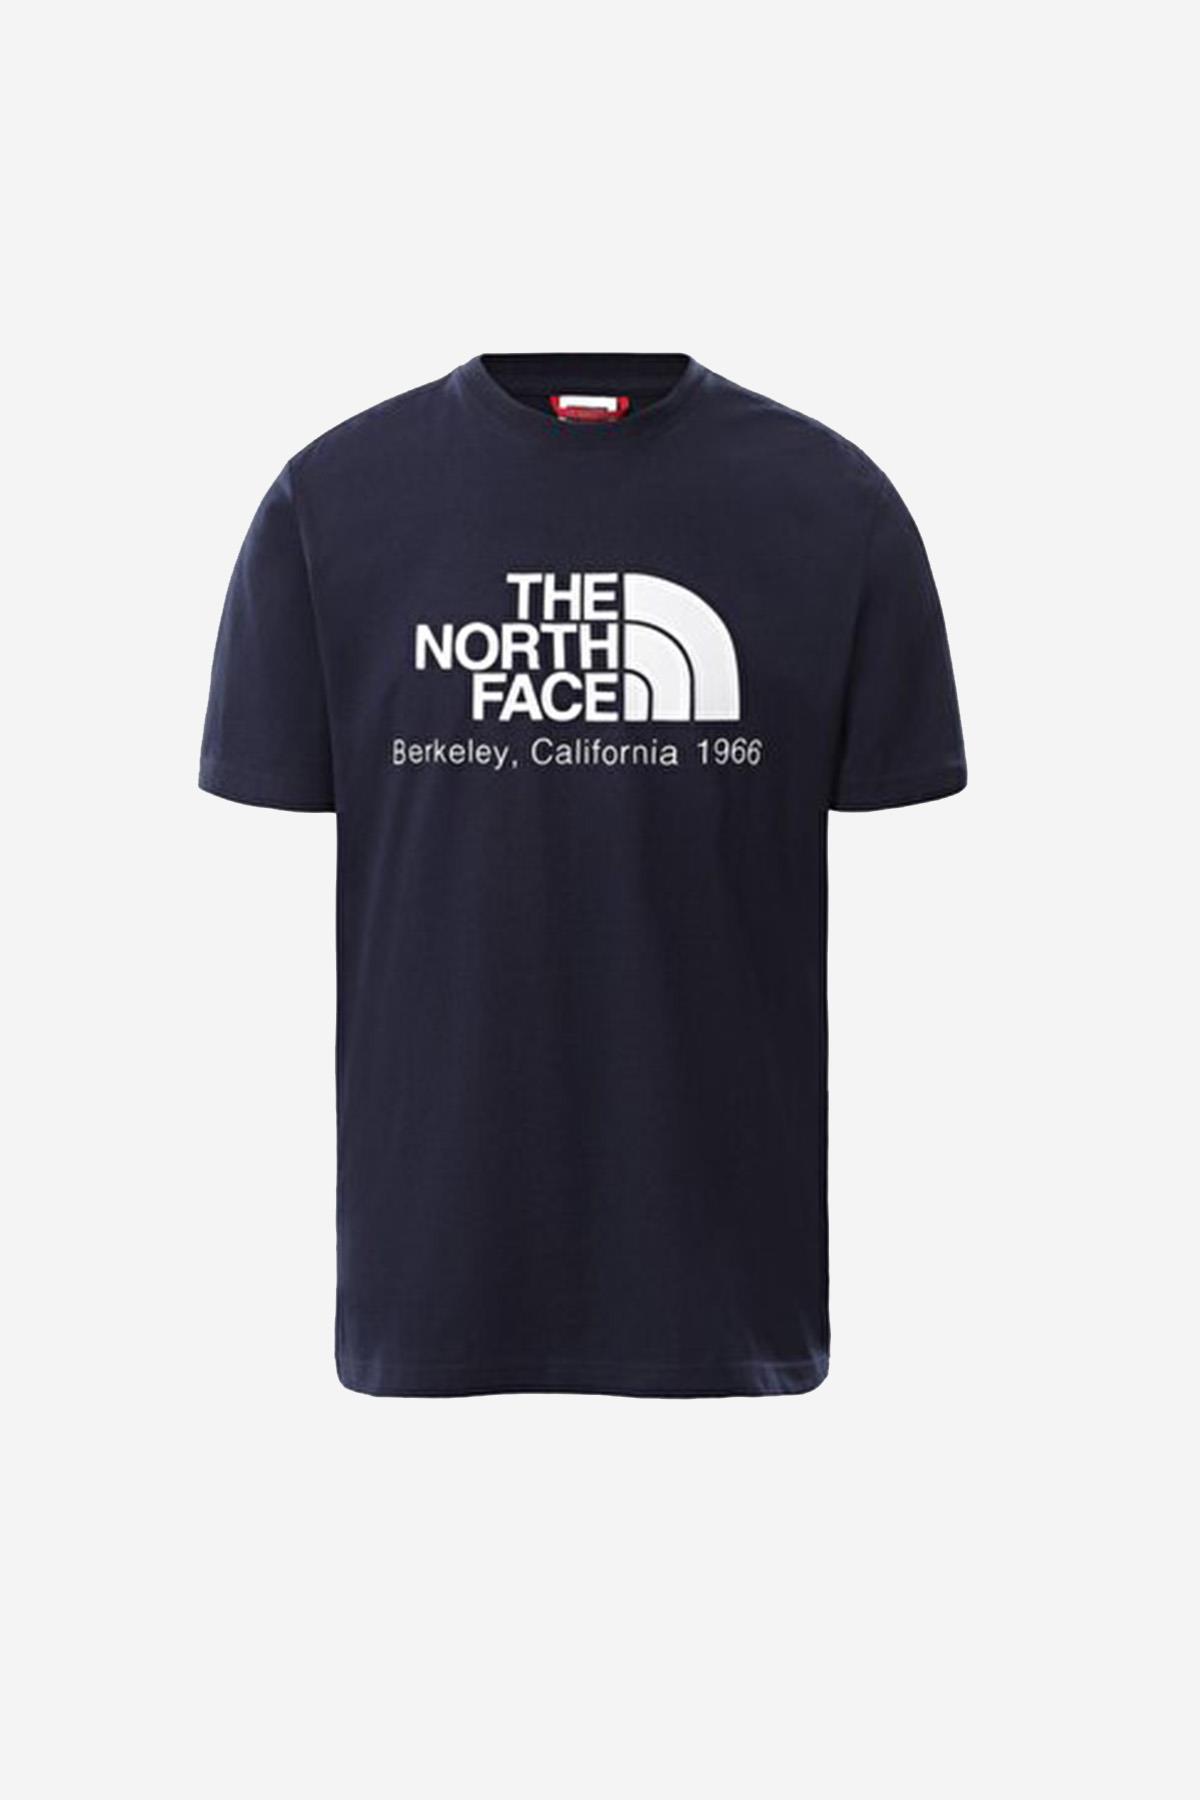  The North Face M BERKELEY CALIFORNIA TEE- IN SCRAP MAT T-Shirt NF0A55GERG11